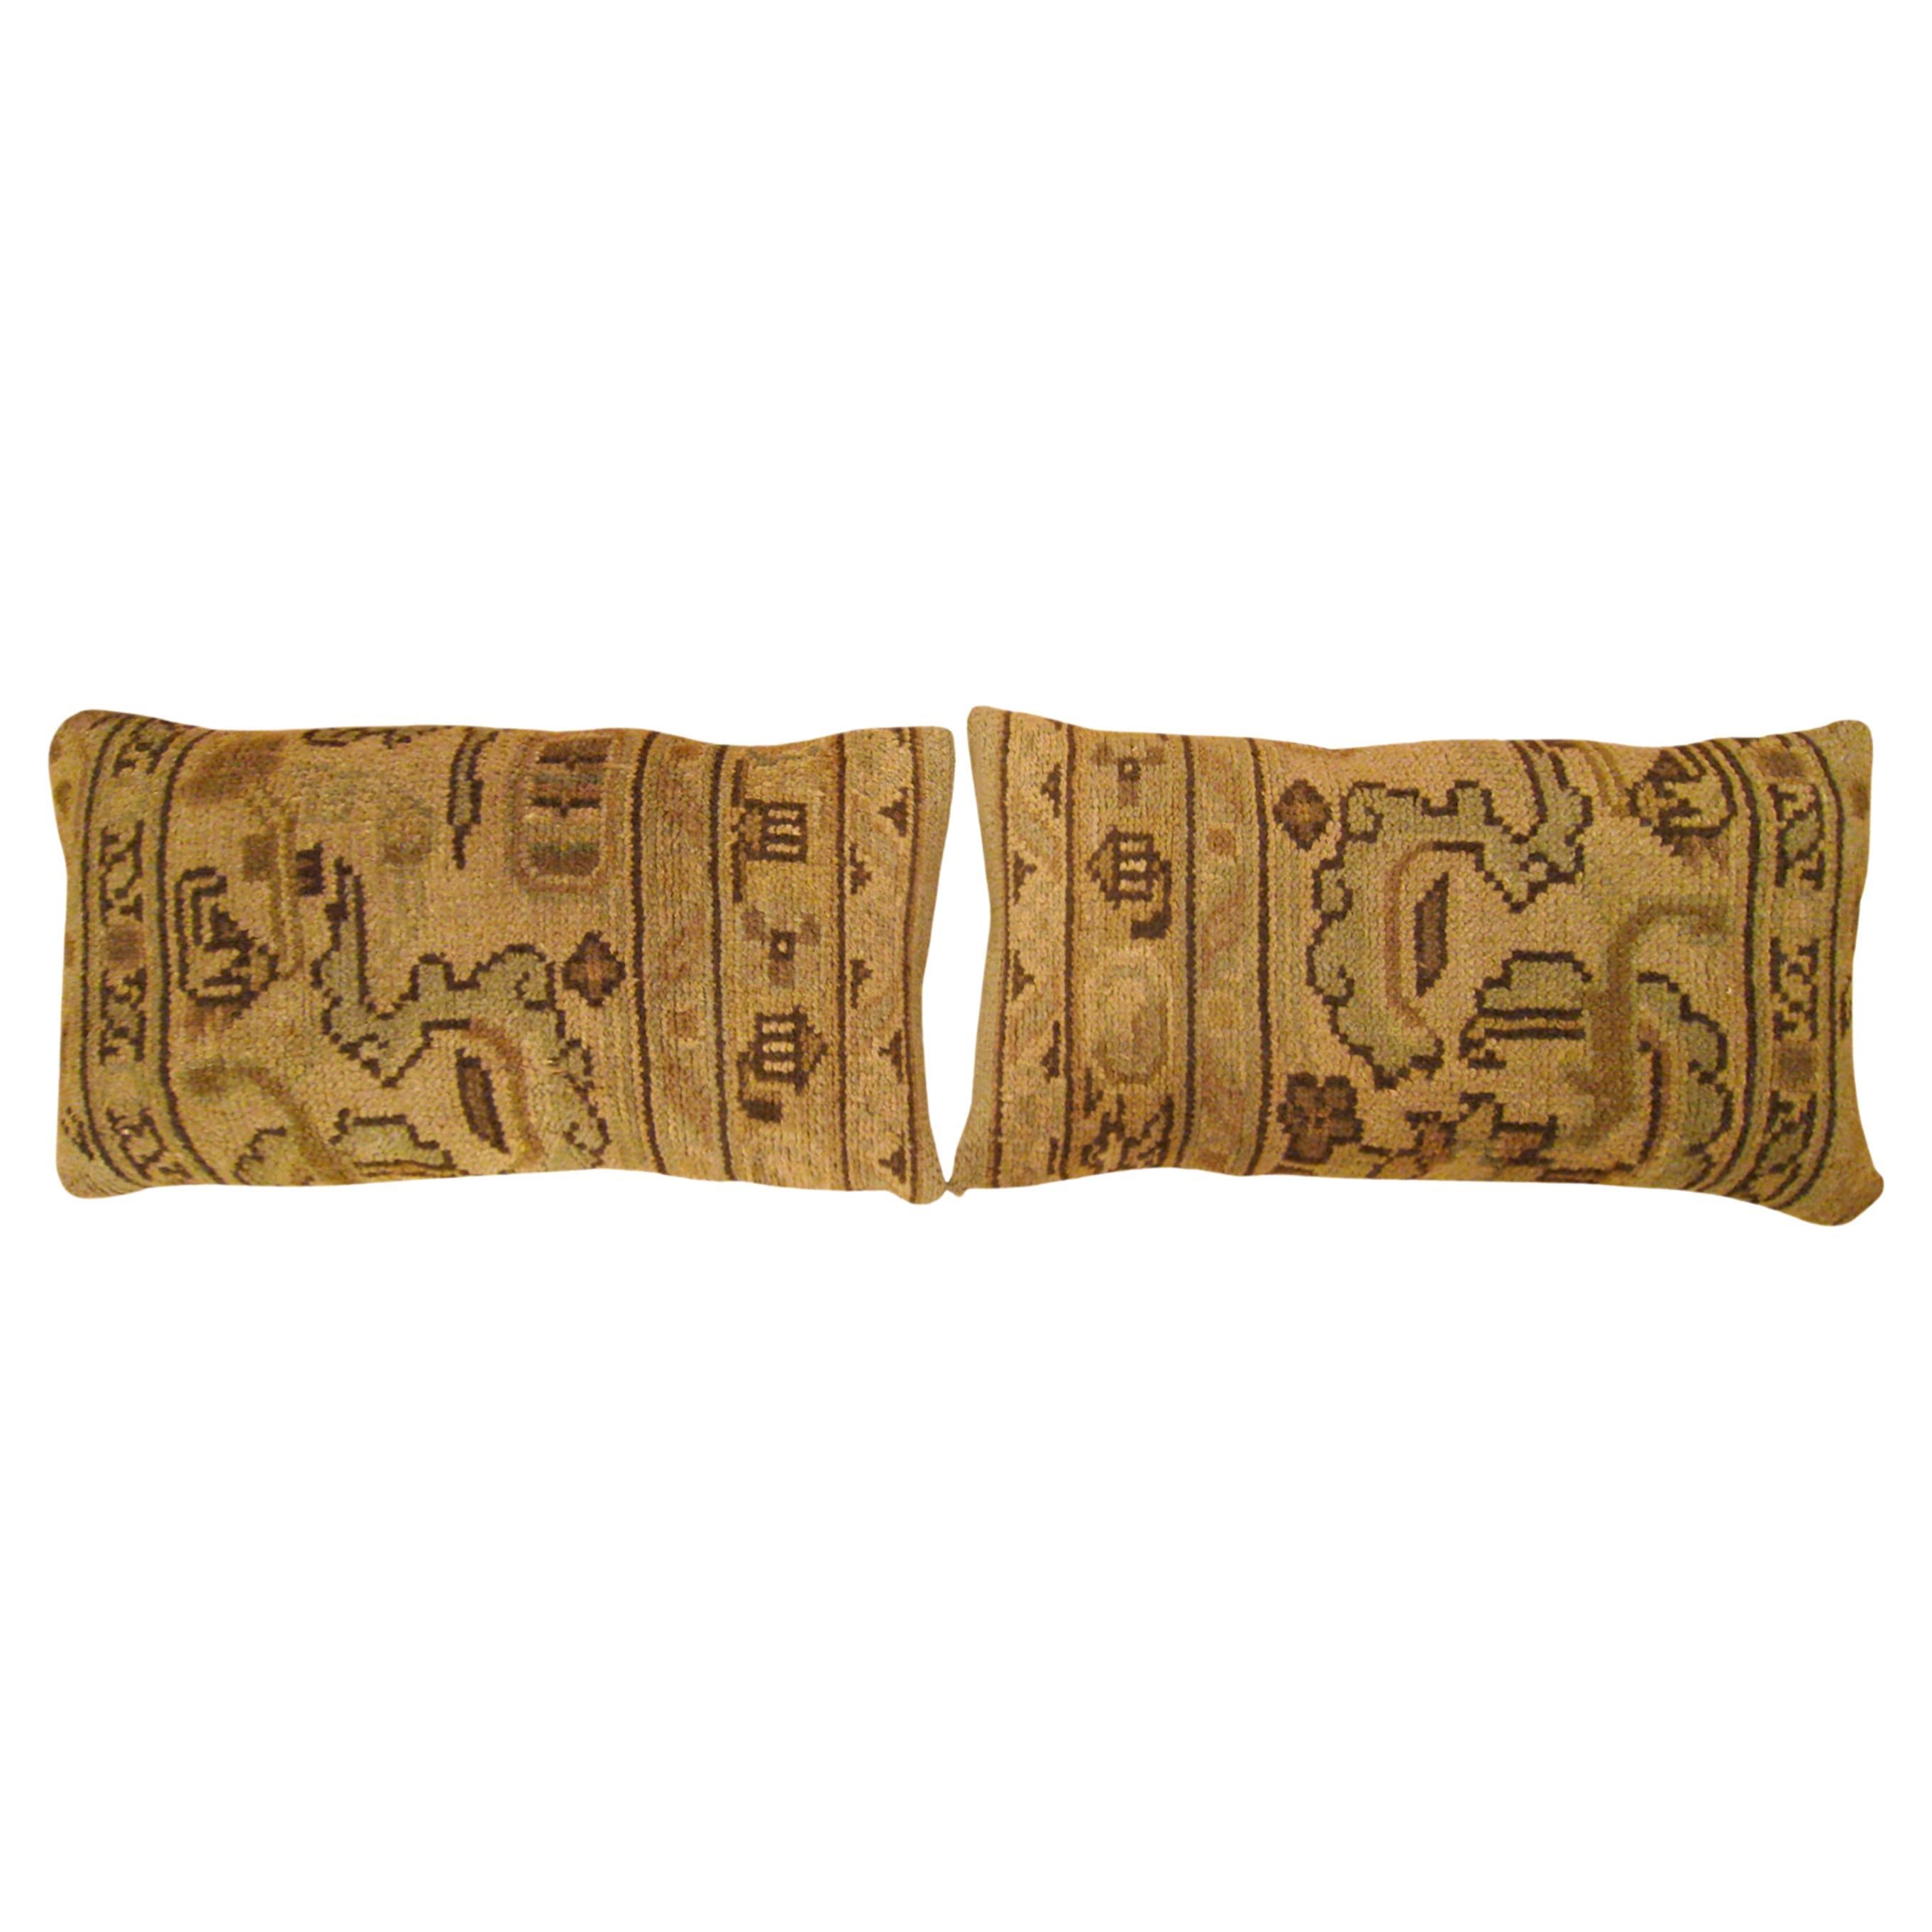 Pair of Decorative Antique Spanish Savonnerie Carpet Pillows with Geometric